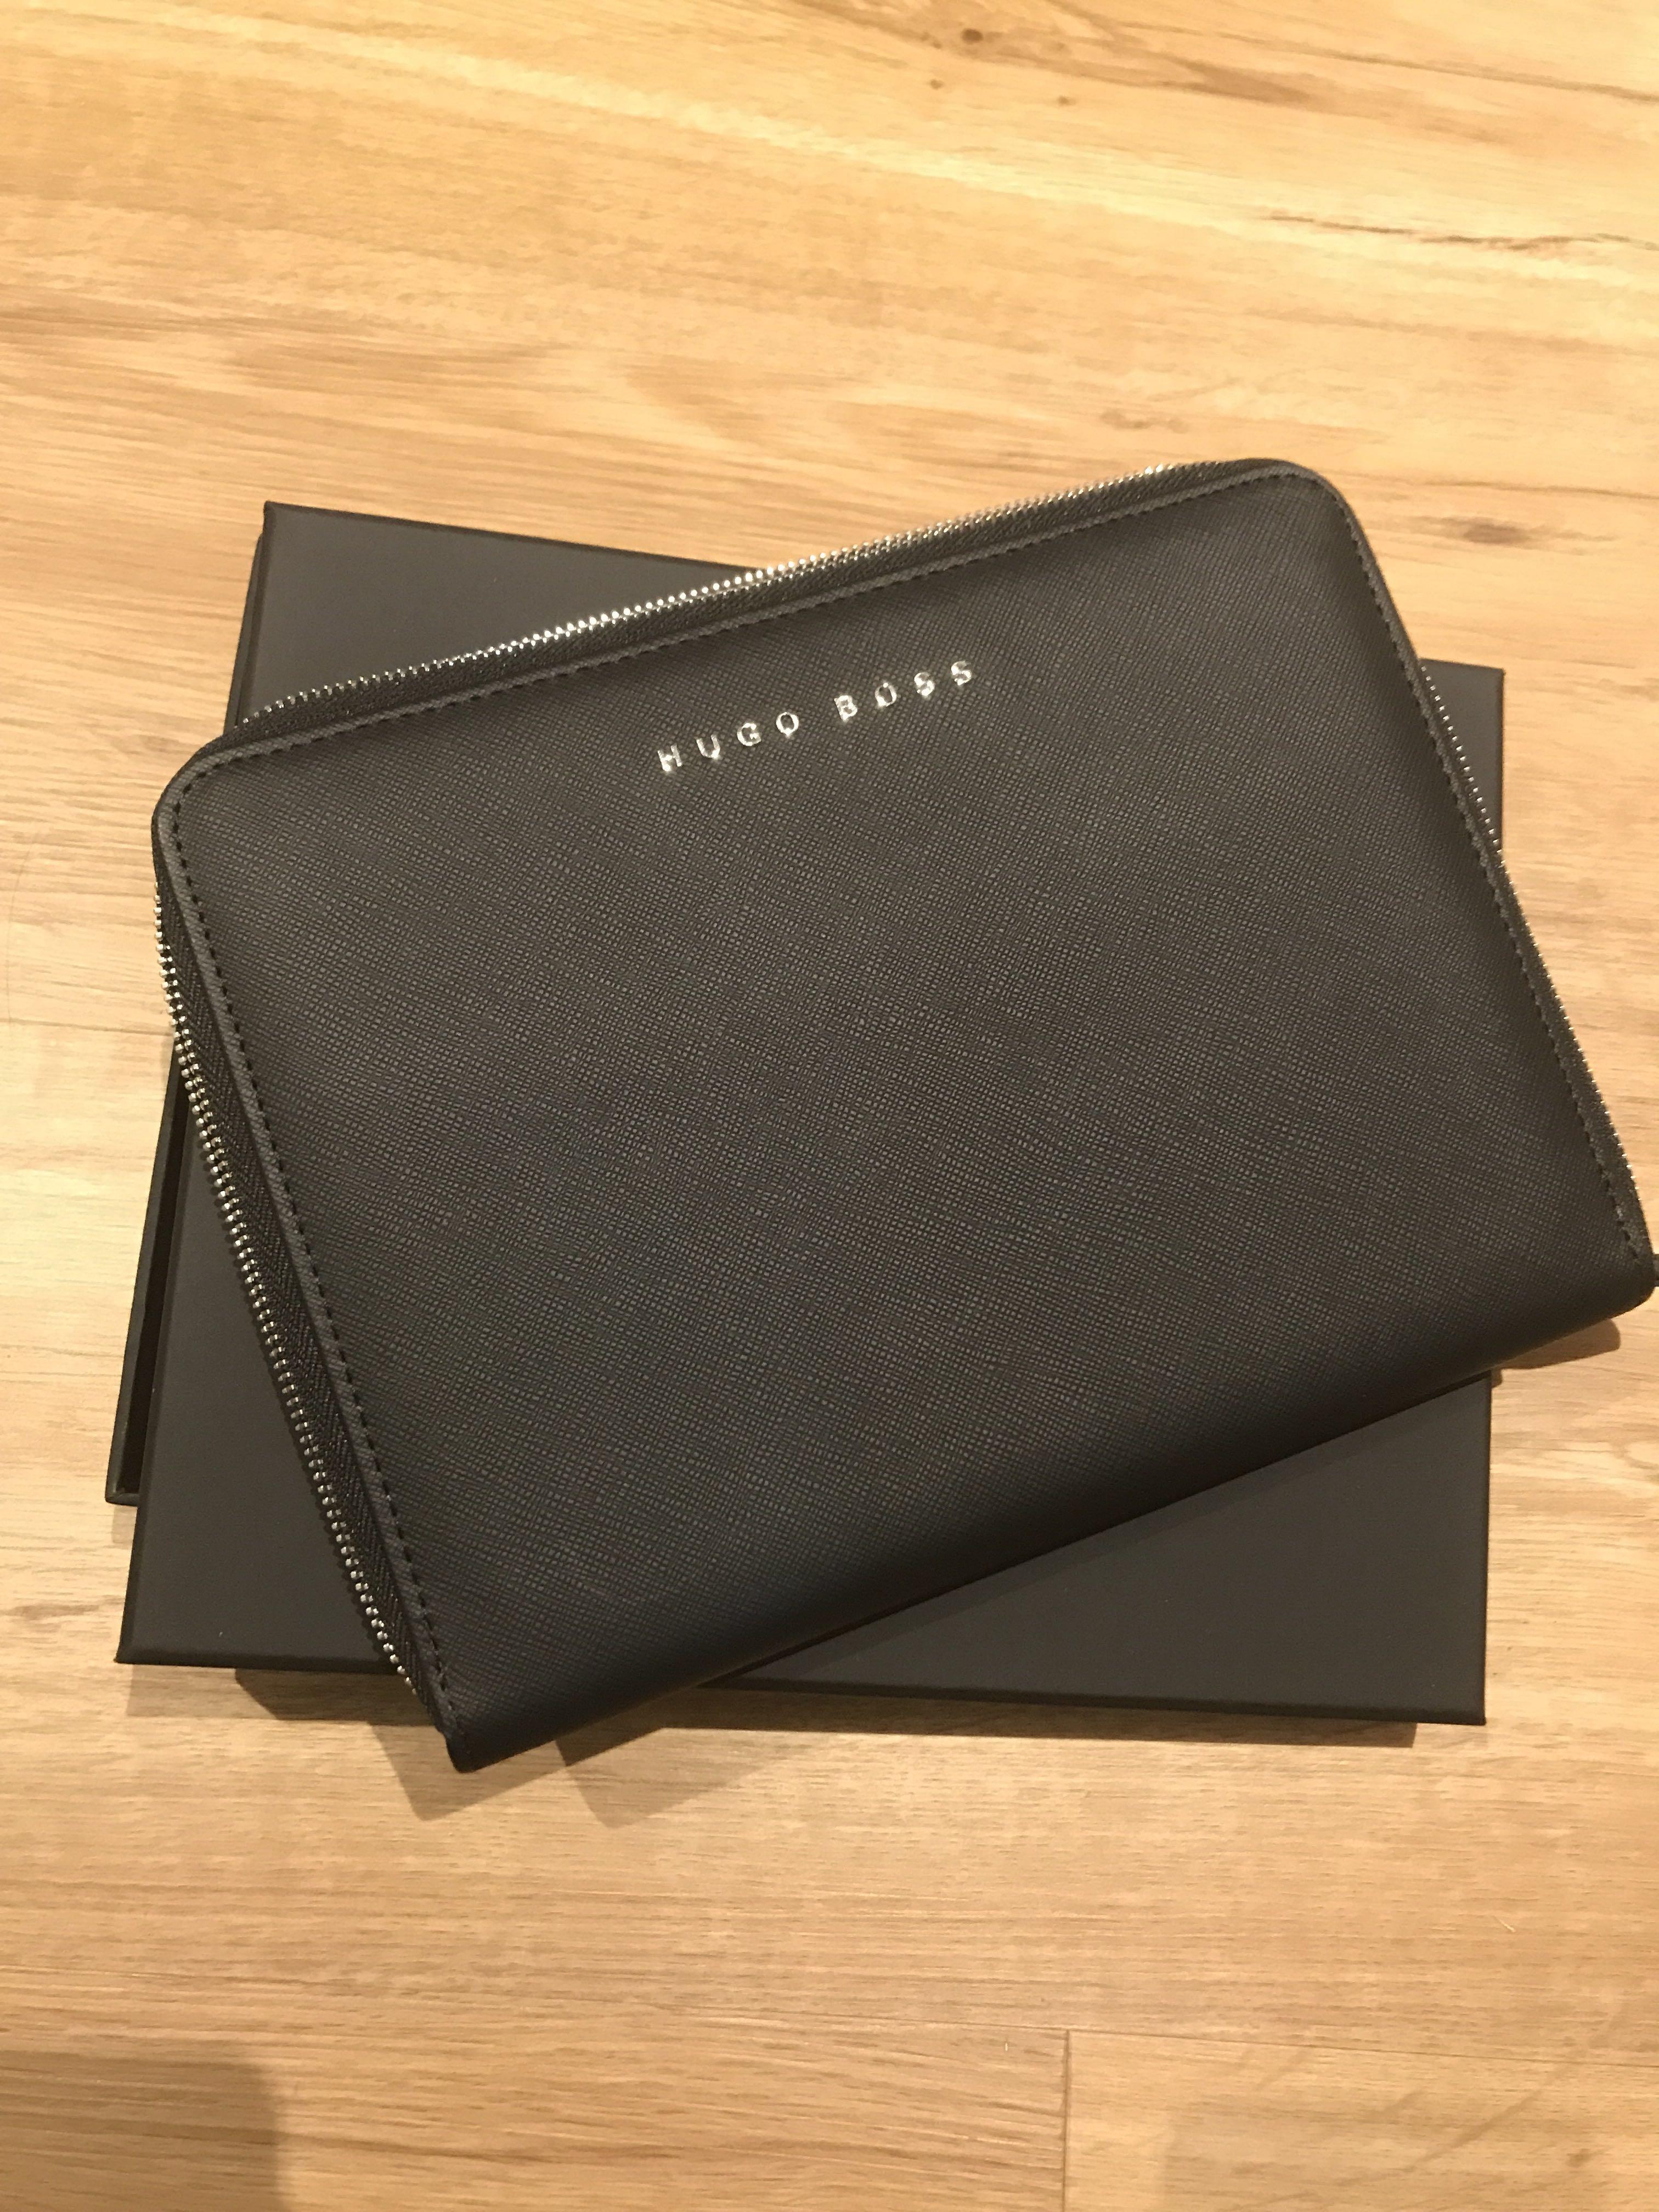 Hugo Boss notebook black leather carry 